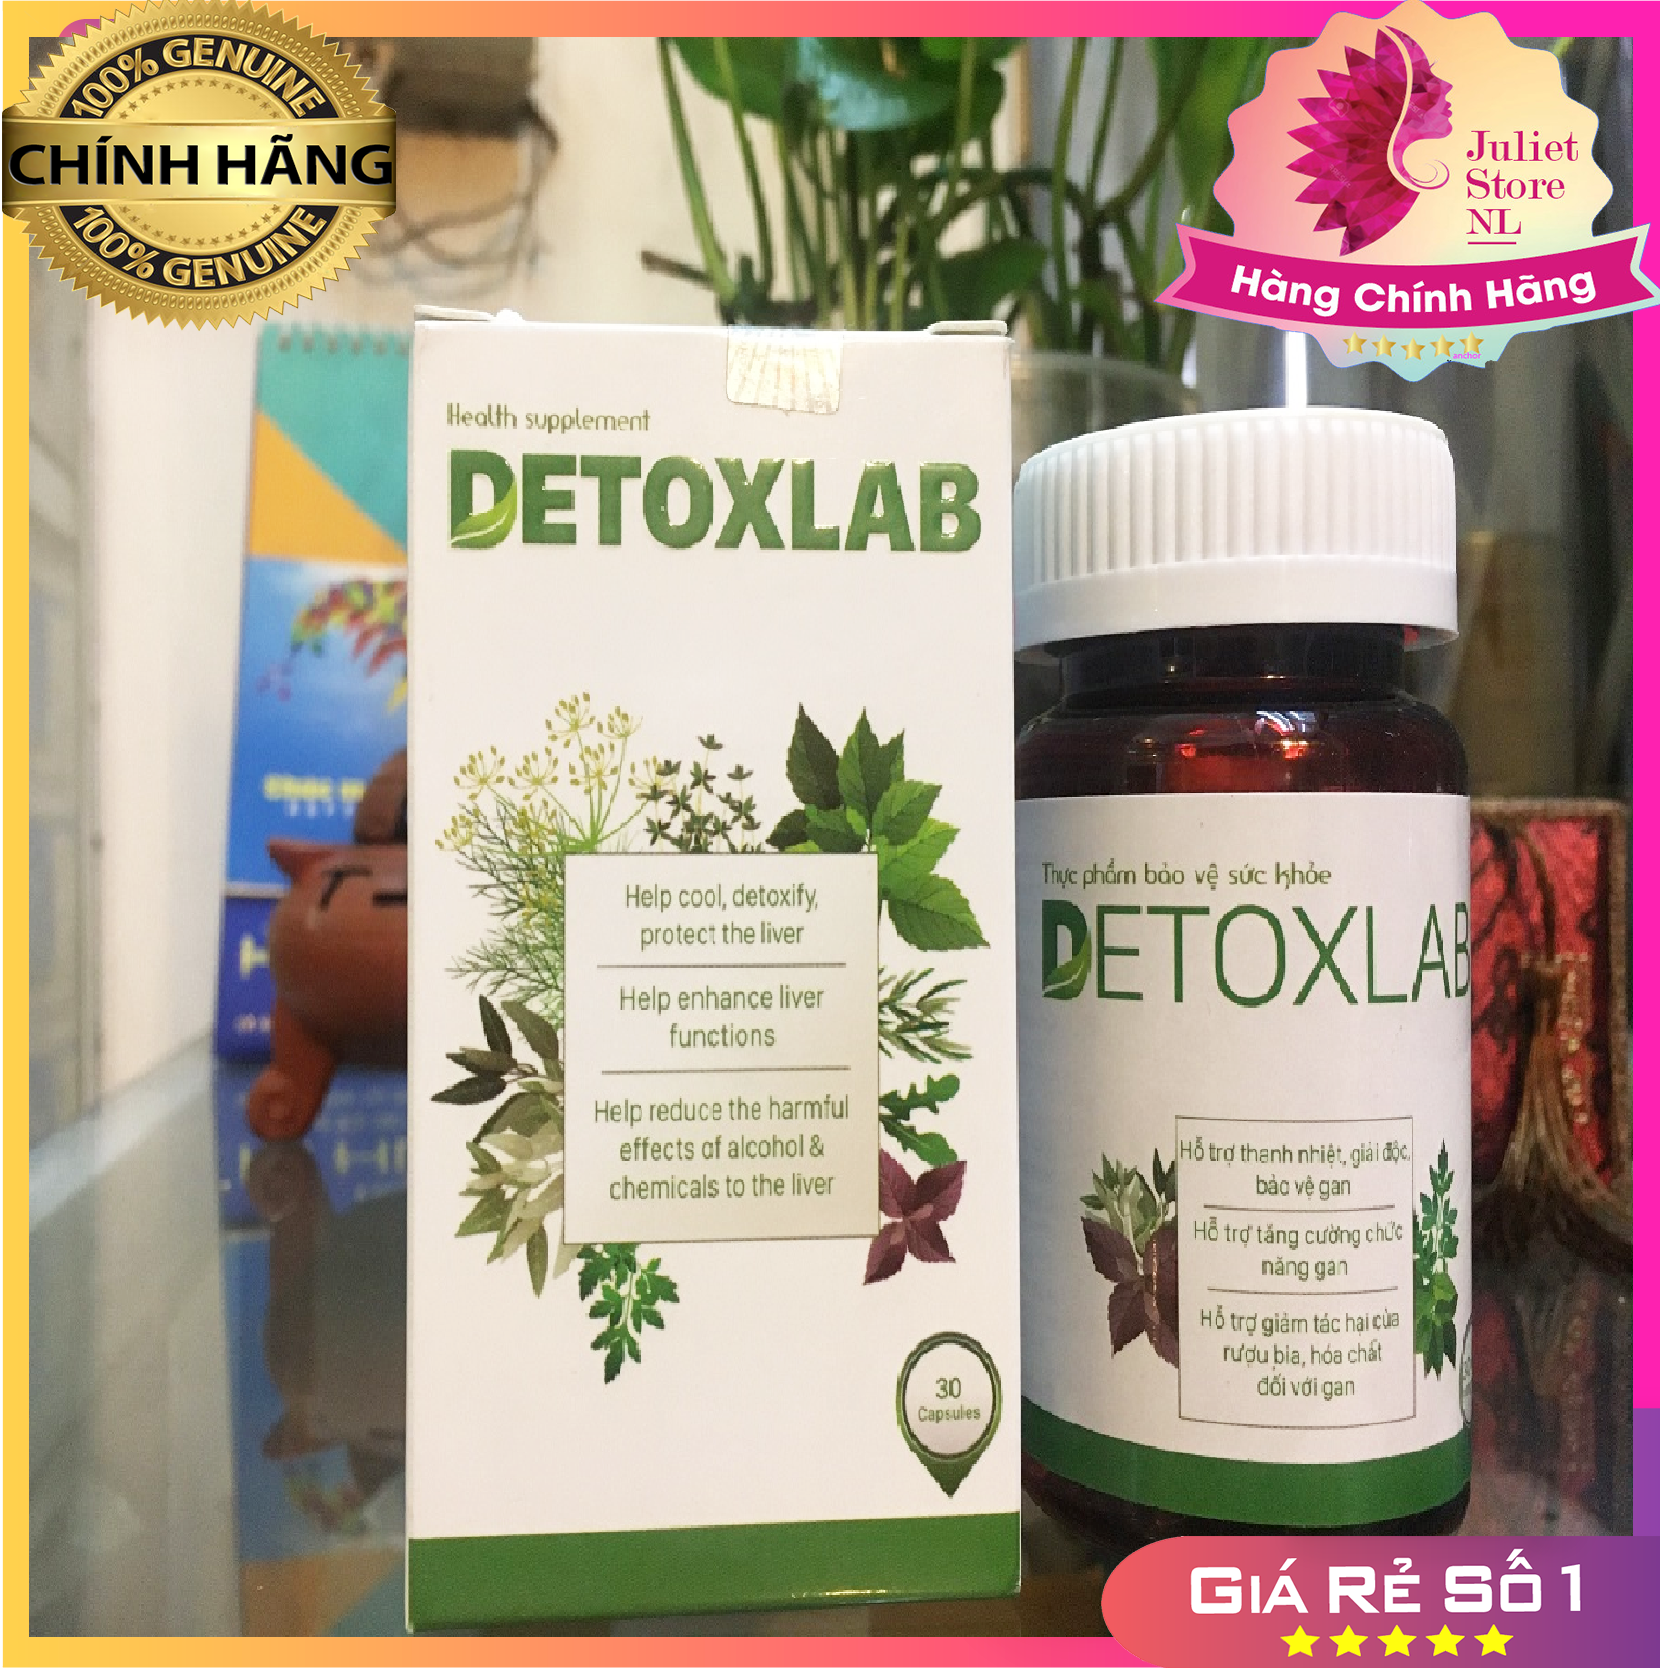 Detoxlab oral tablets detox purification detox body